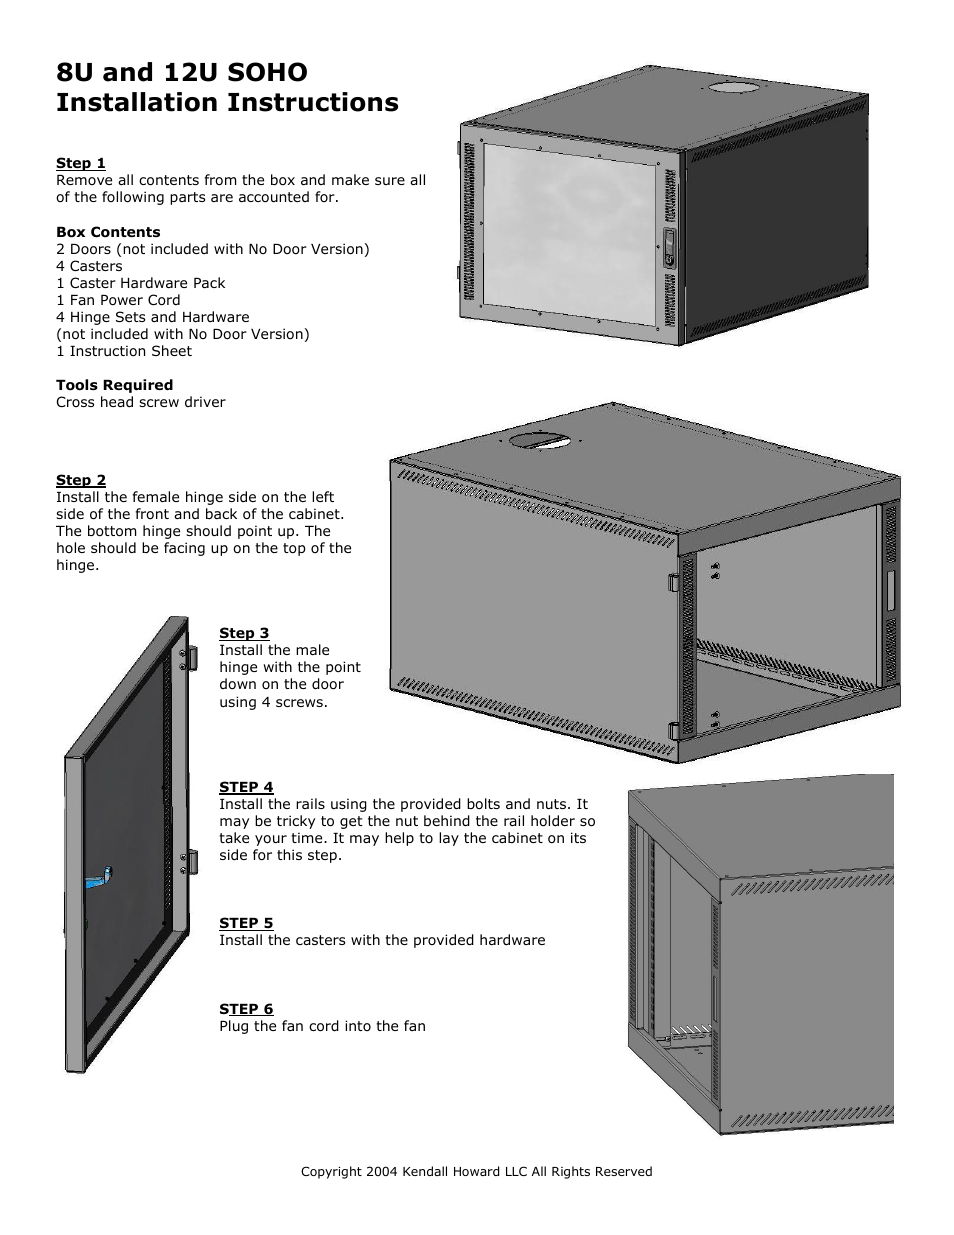 1932-3-001-08 8U Compact SOHO Server Cabinet